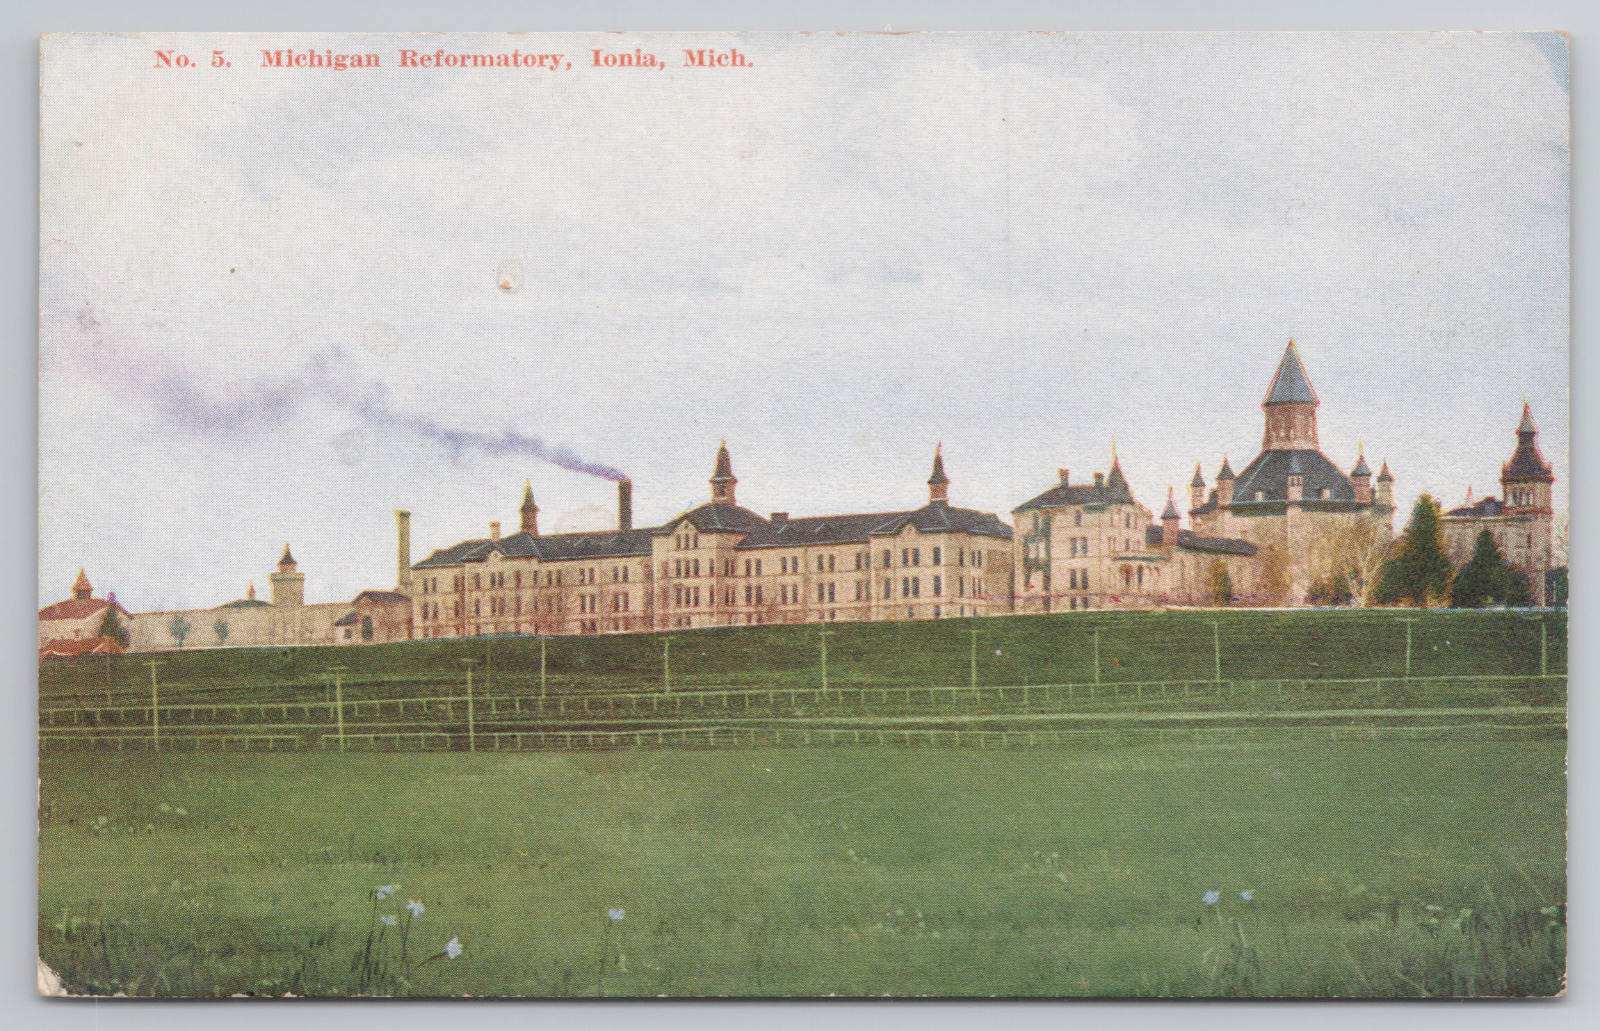 Ionia Michigan Reformatory Asylum for Insane Criminals Hospital Postcard 1908